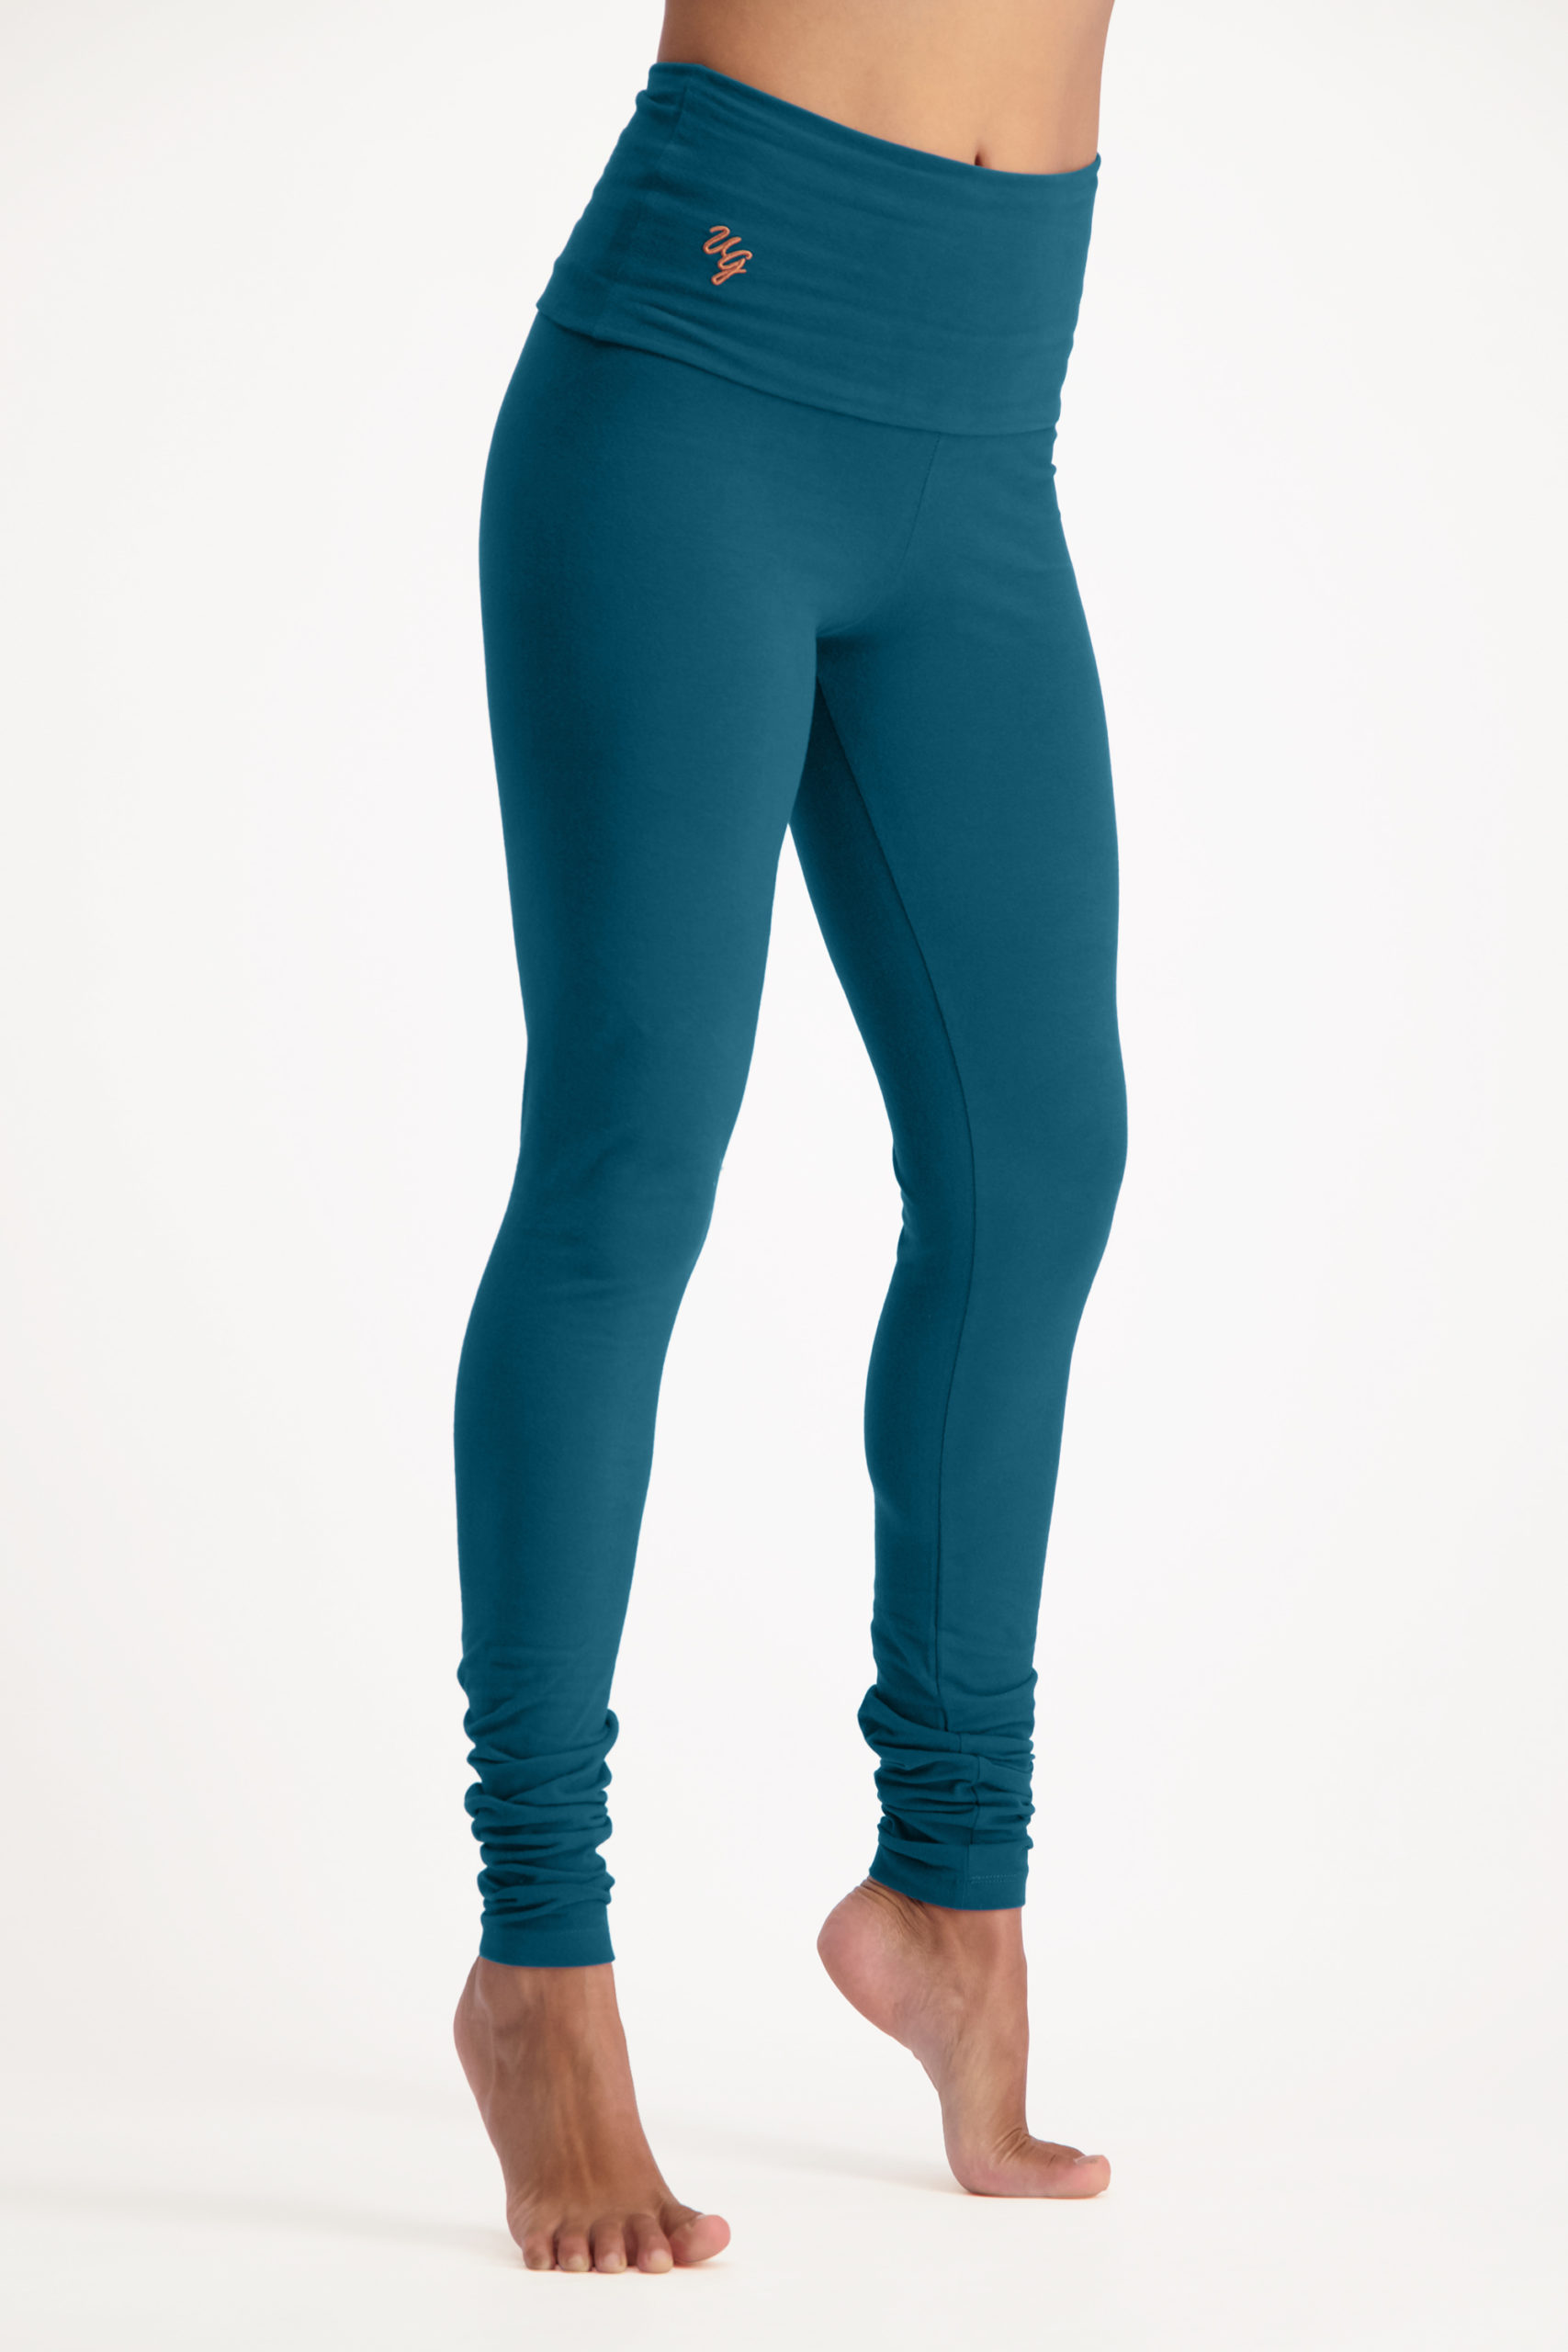 Soedan ijsje Sitcom Yoga Kleding Sale | Broeken, leggings & tops | Urban Goddess